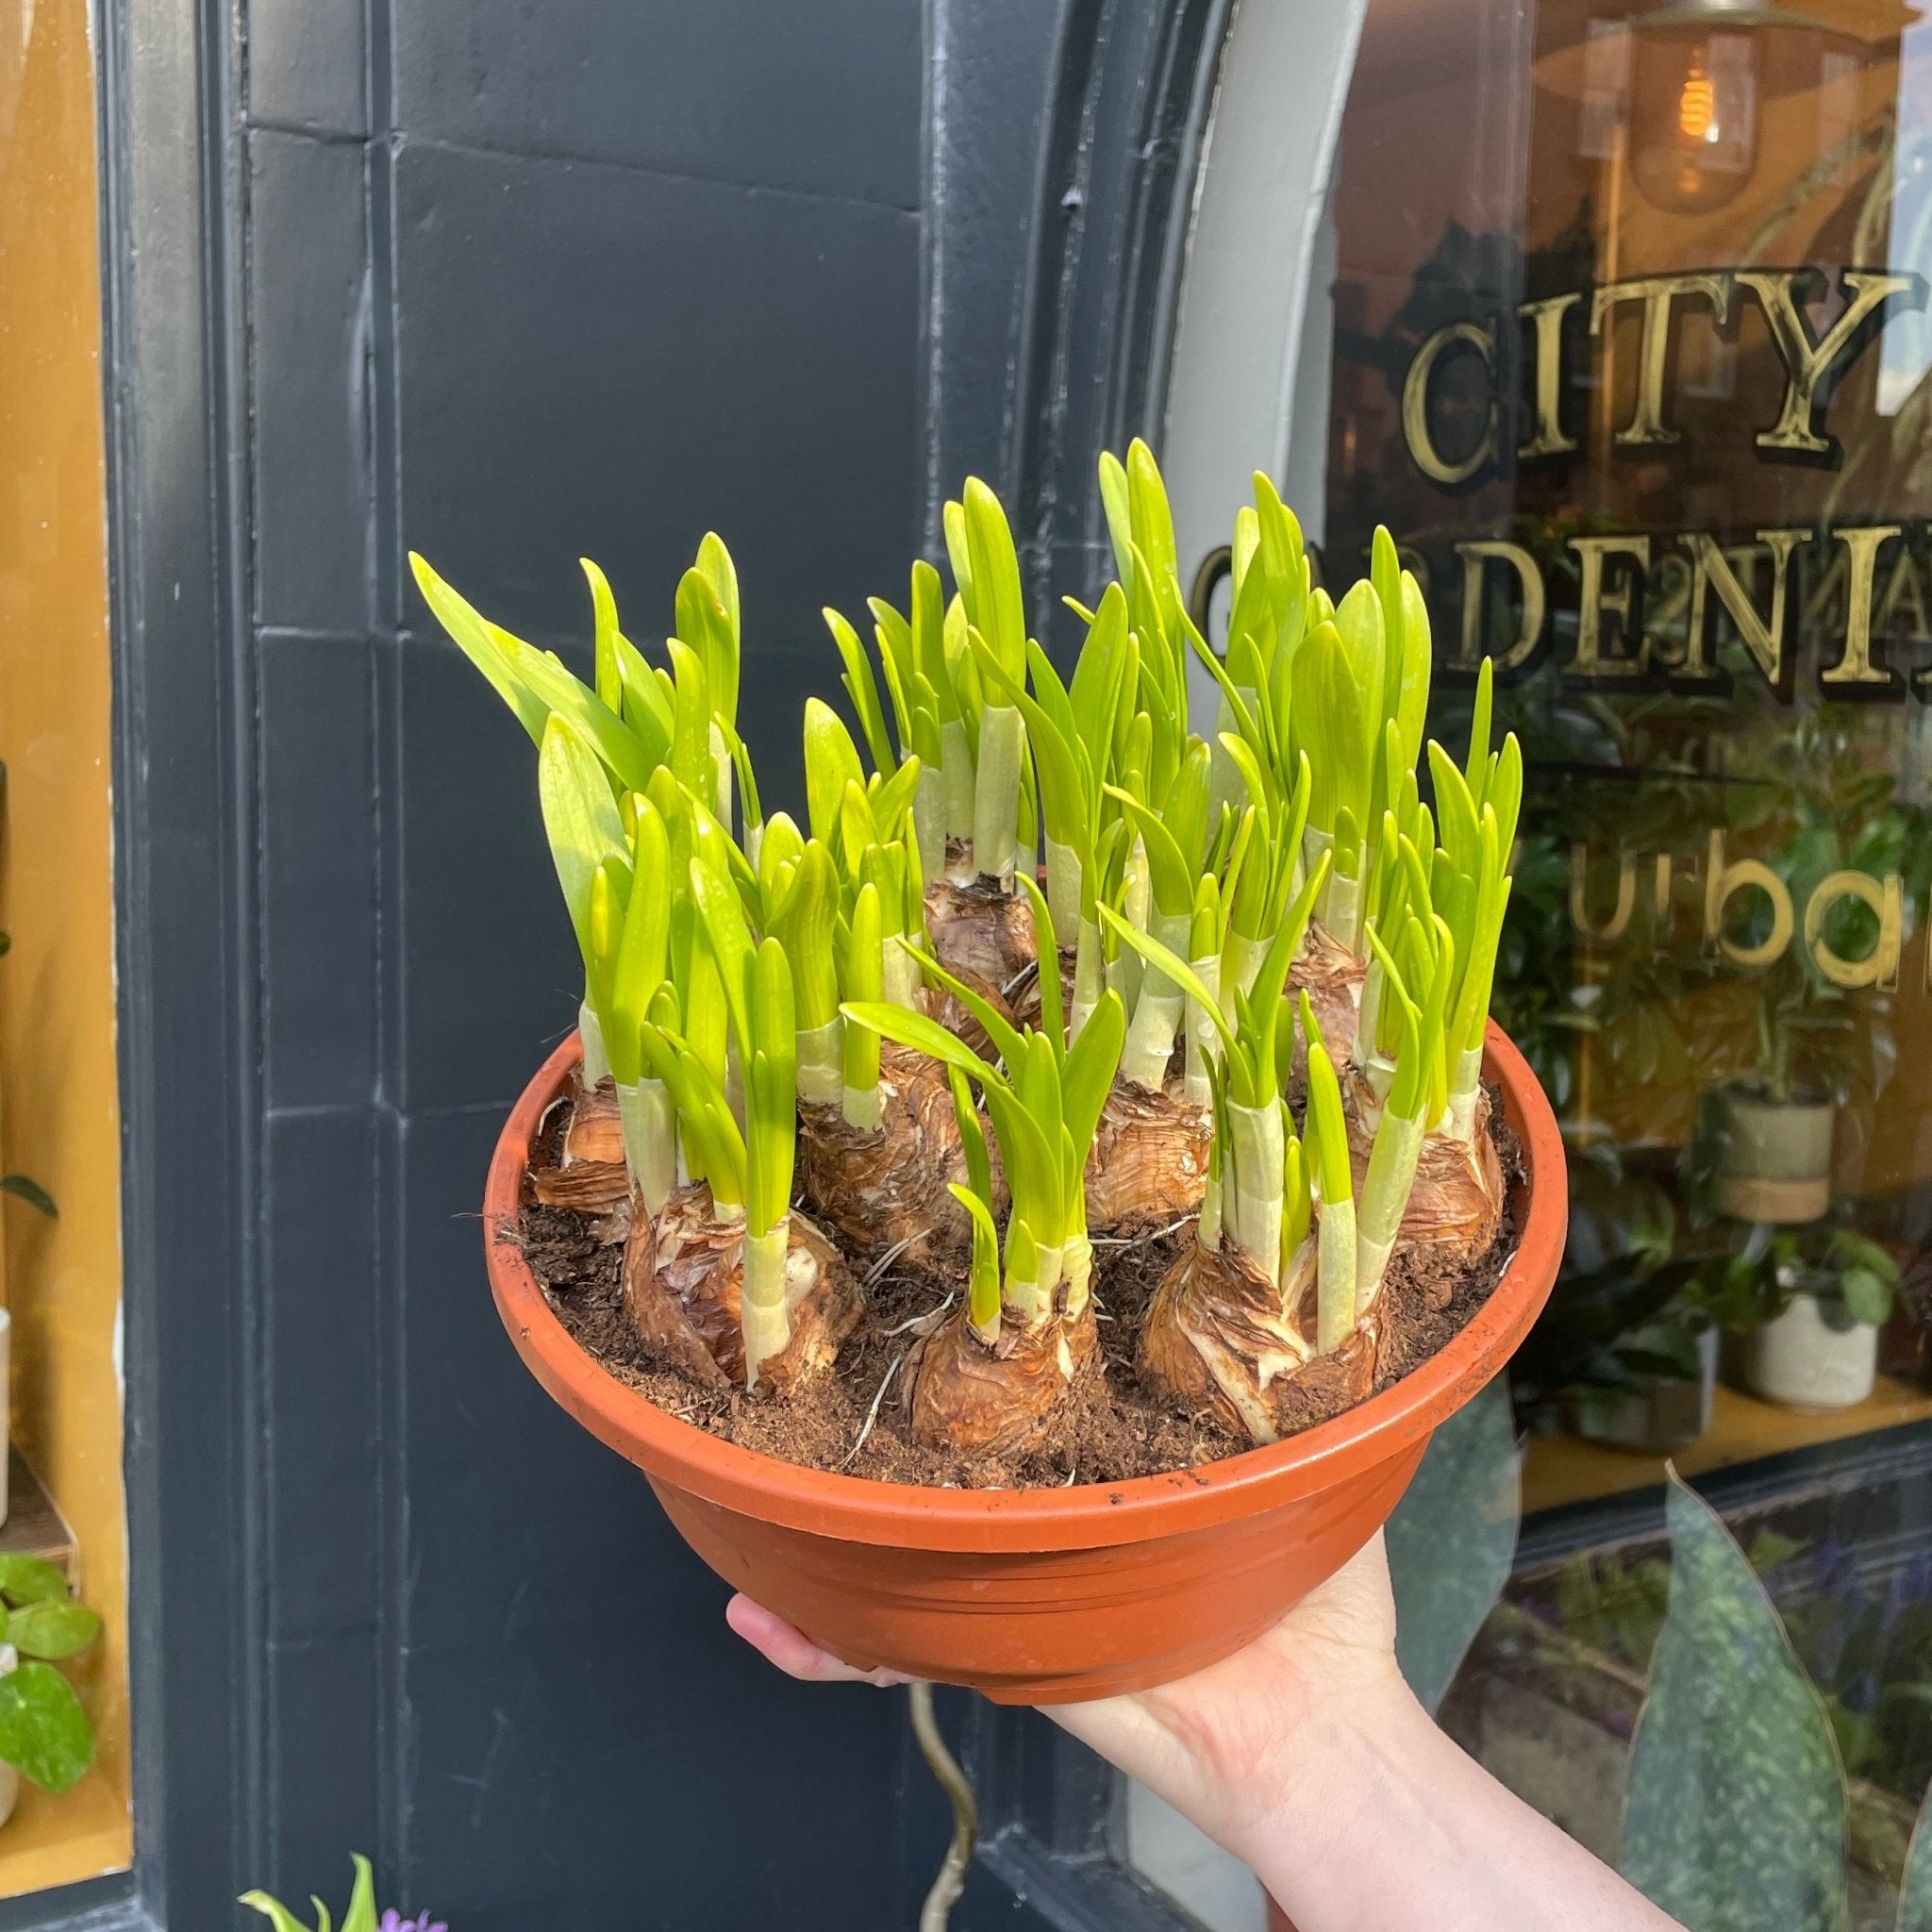 Narcissus 'Tête-à-tête' (23cm pot) - grow urban. UK